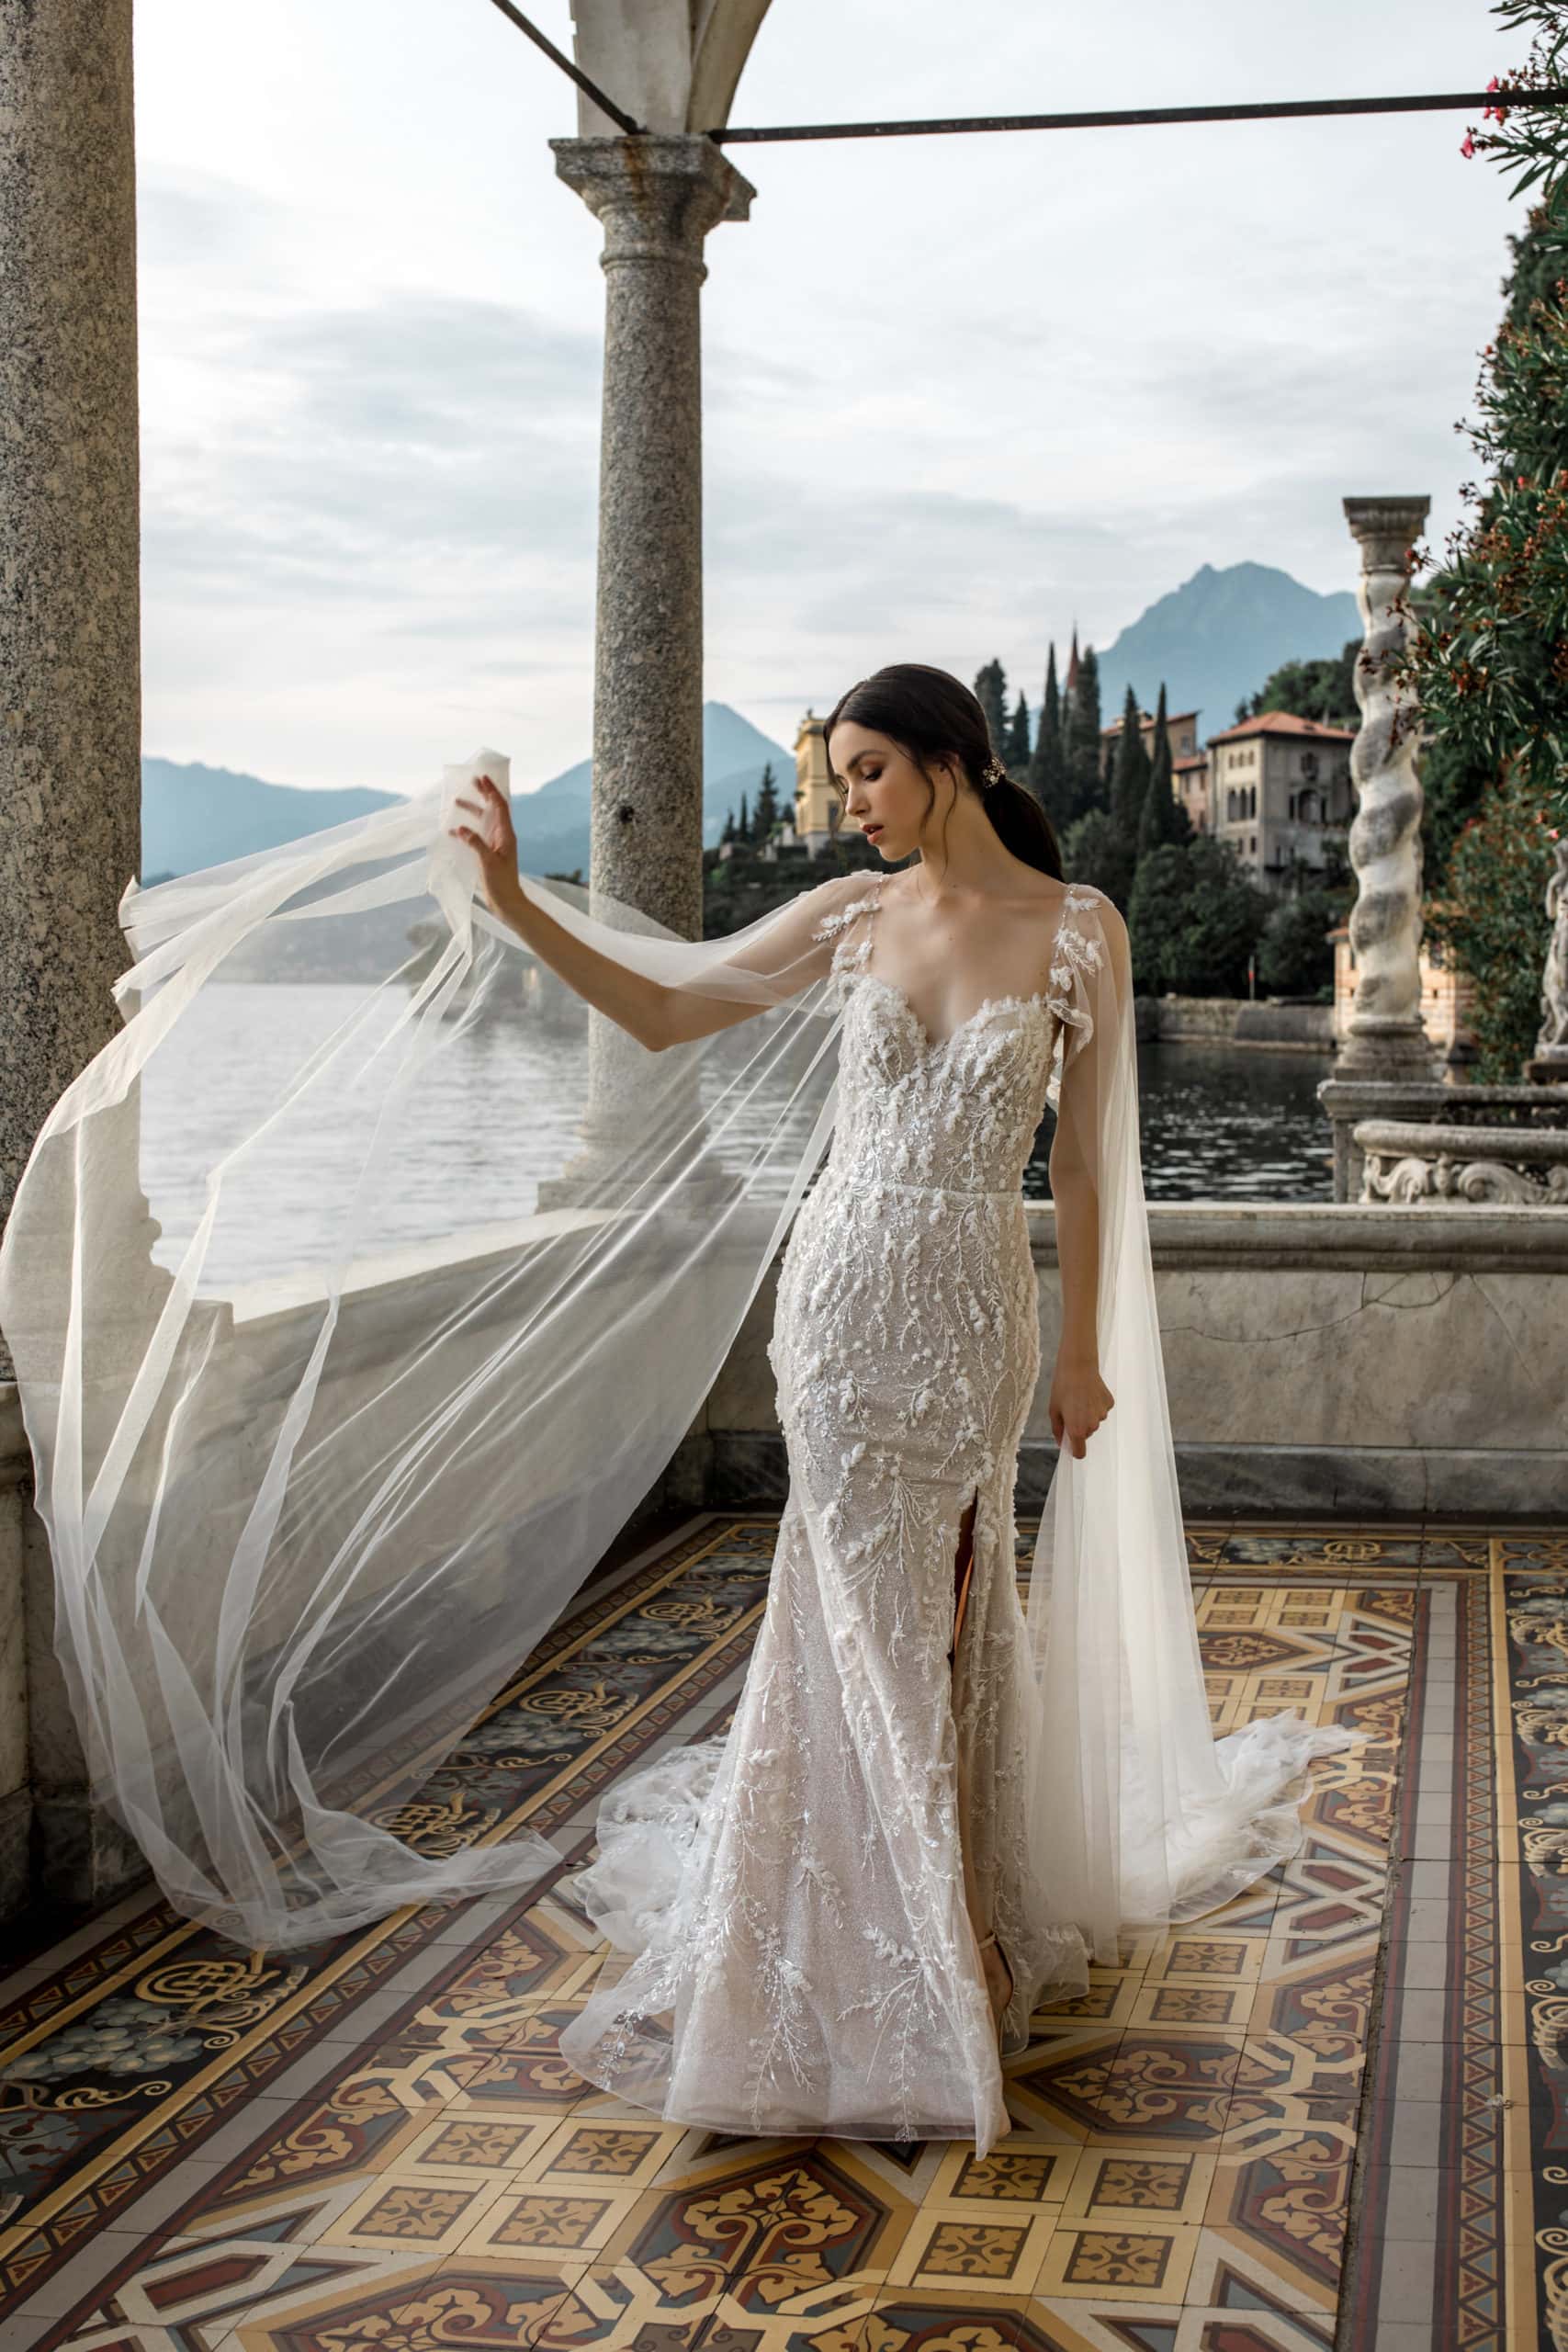 Model tosses veil in detailed mermaid style dress